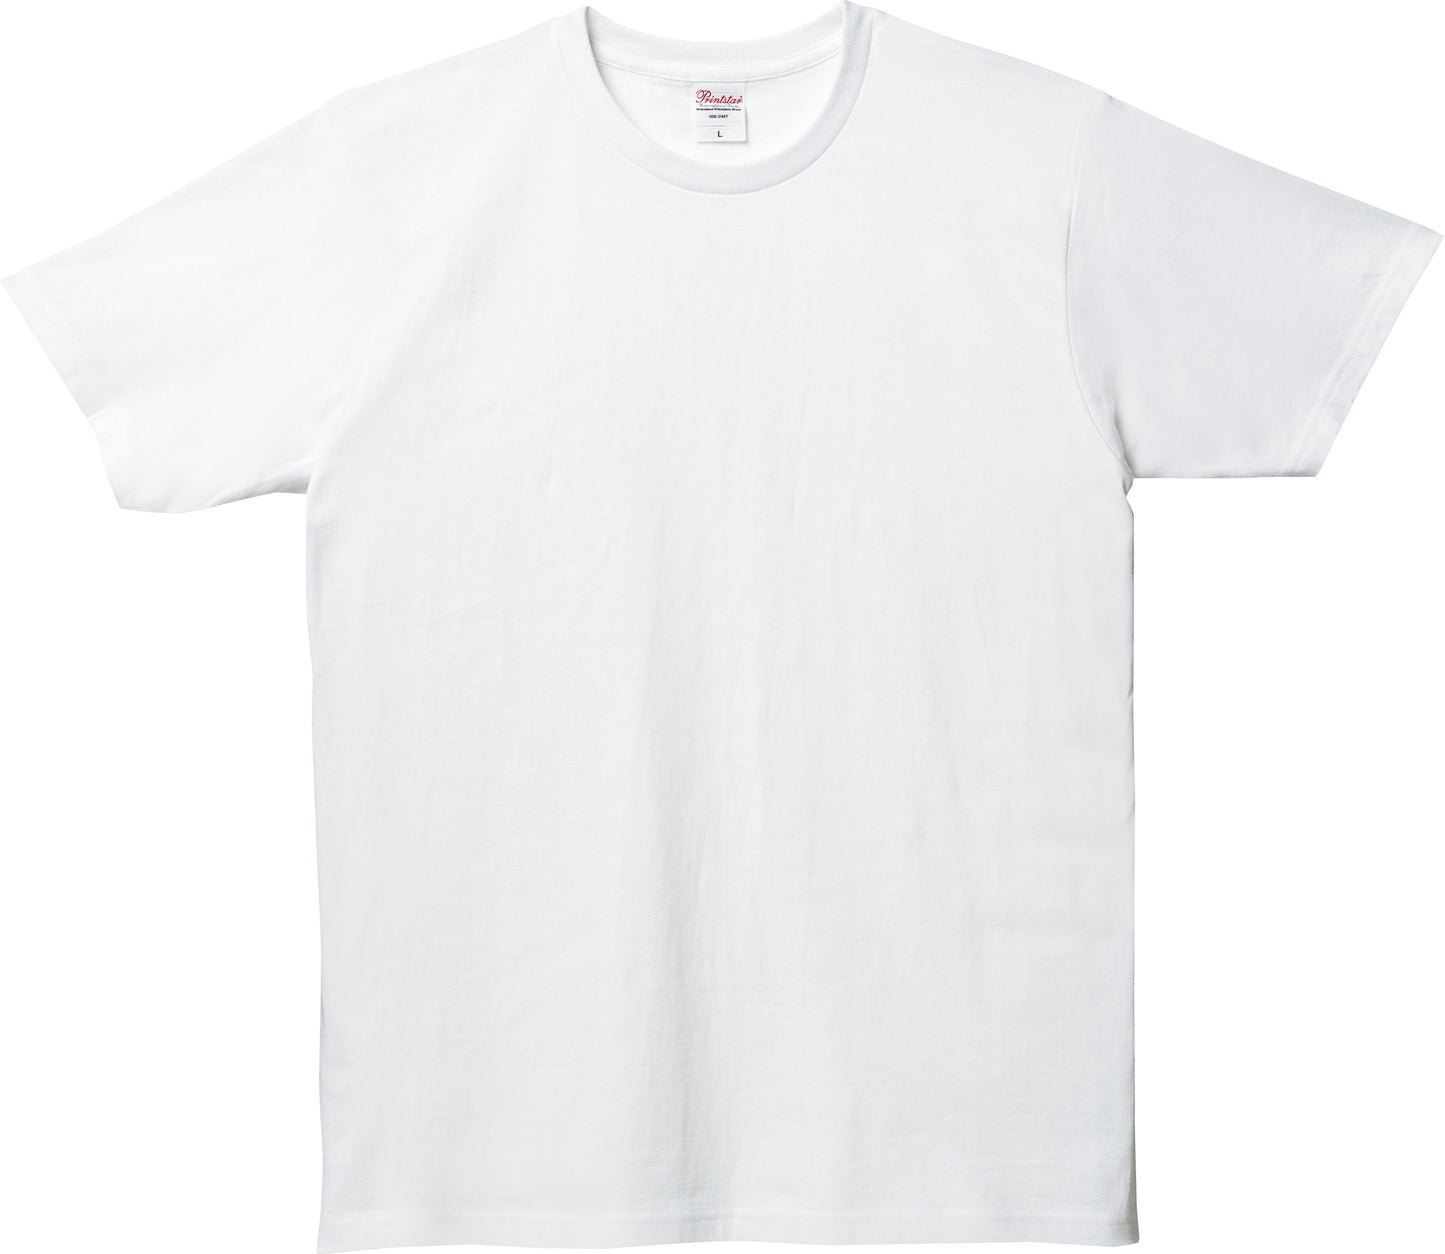 [Plus-1] 086-DMT 5.0oz Basic T-shirt XL~3XL size